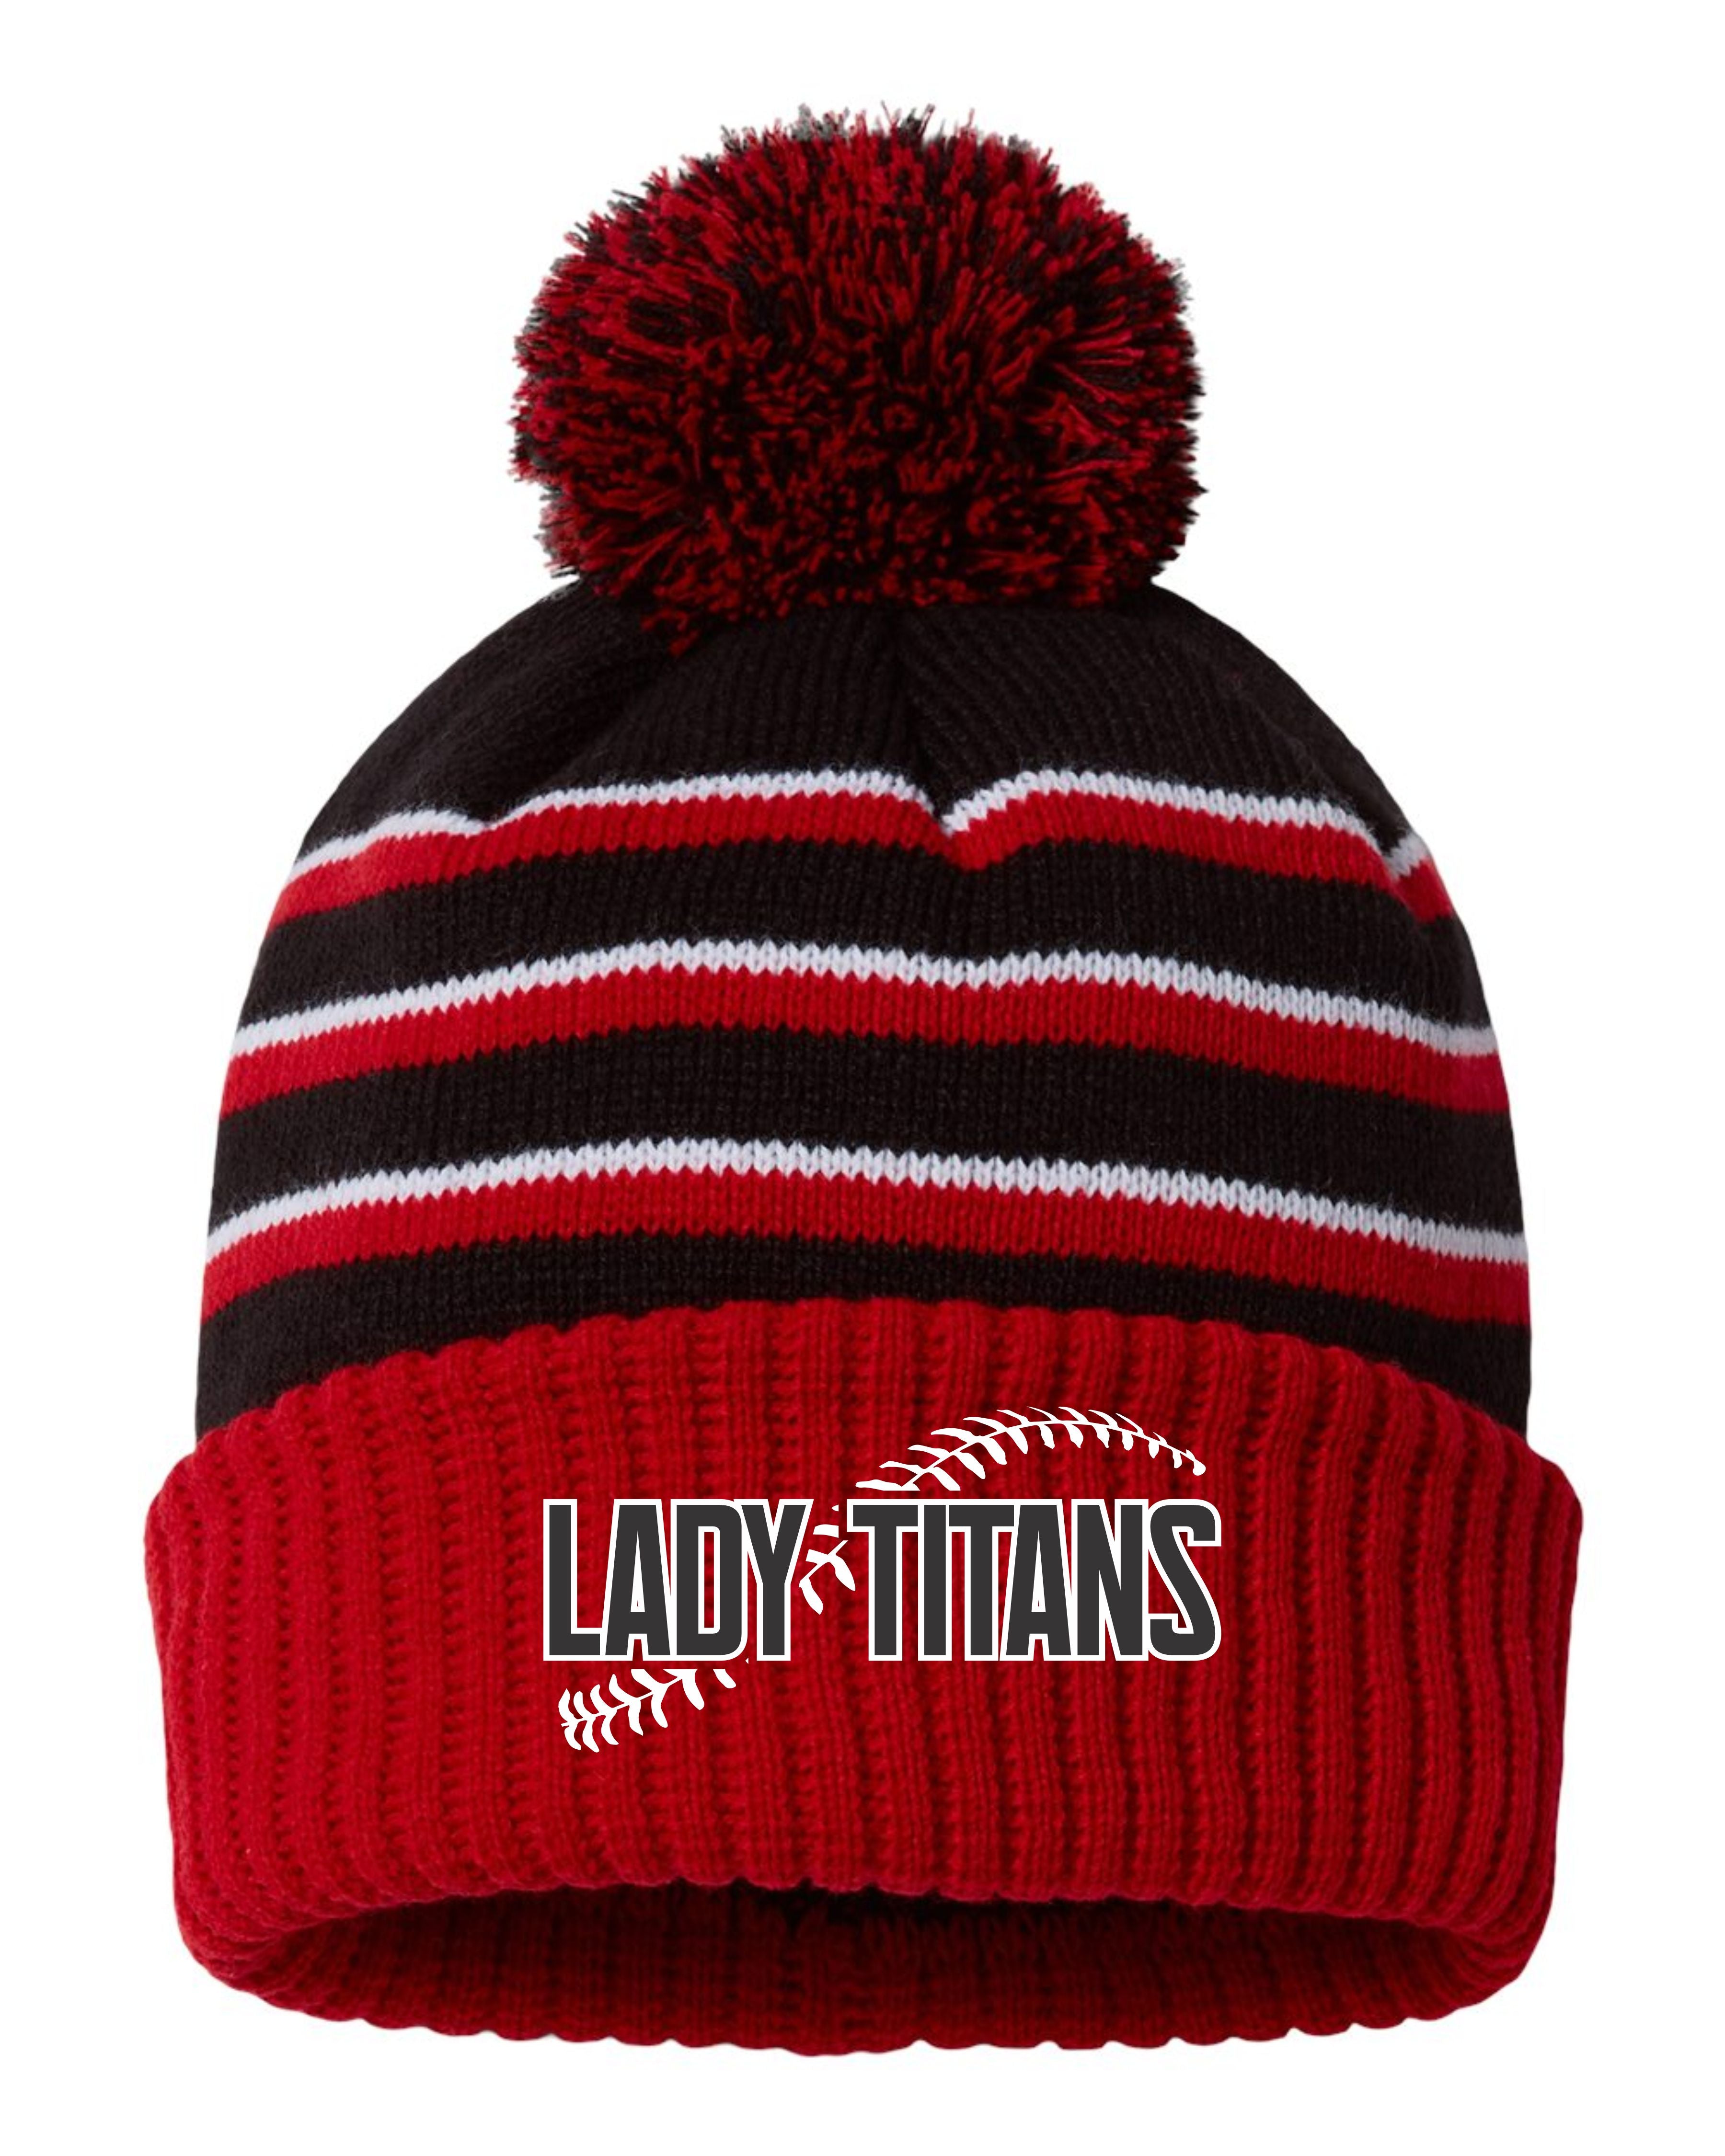 Lady Titans SB Stocking Hat